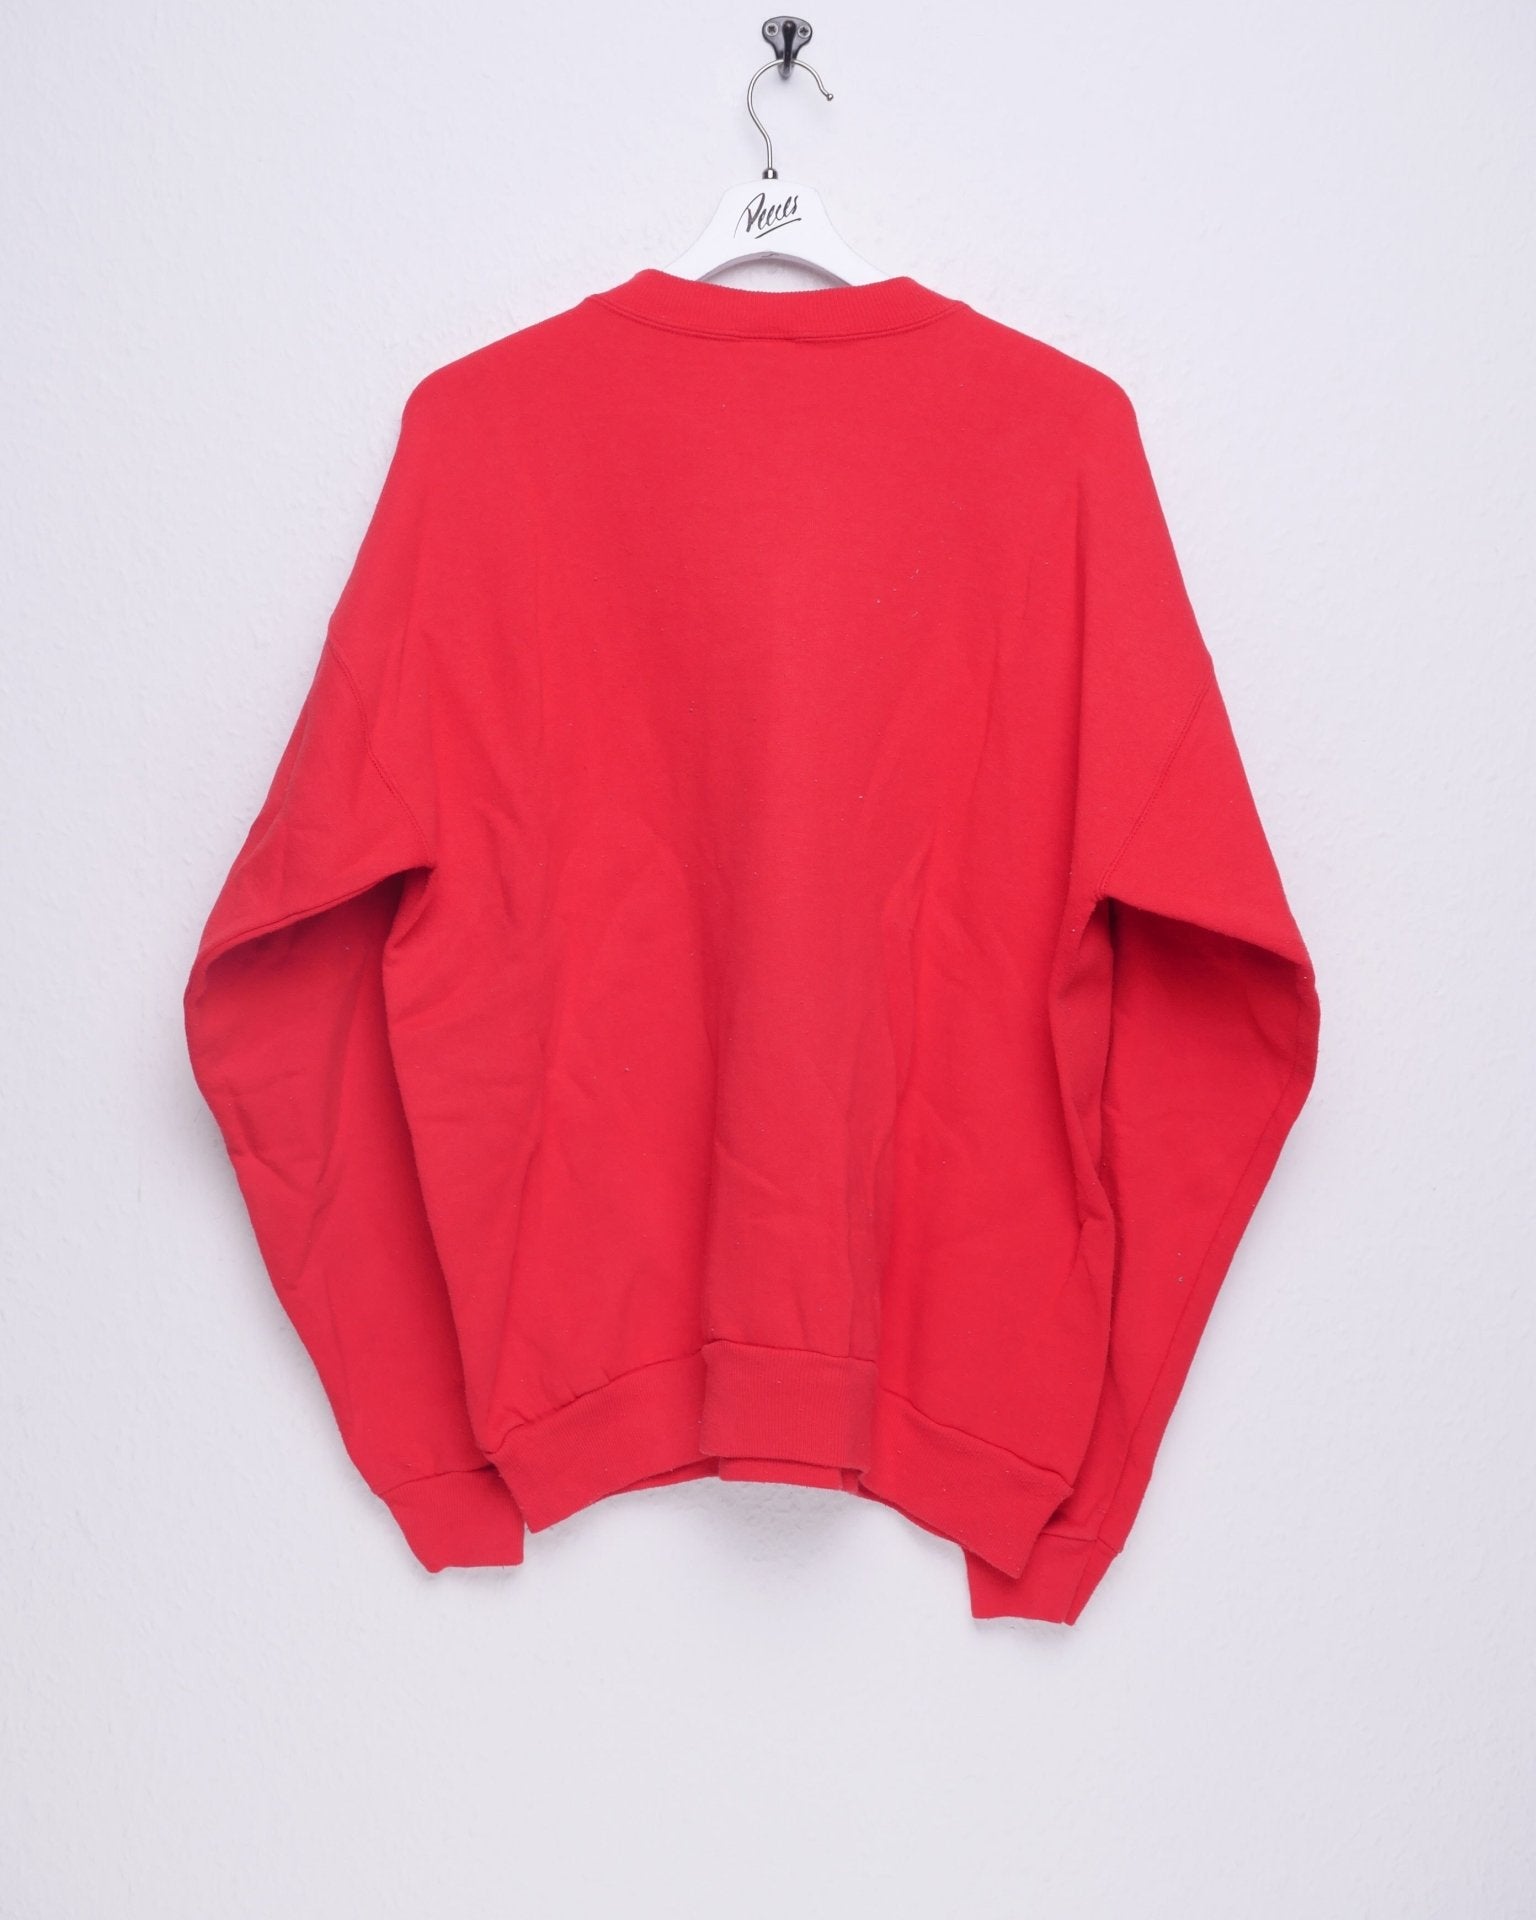 printed Big Logo 'Arizona' red Sweater - Peeces